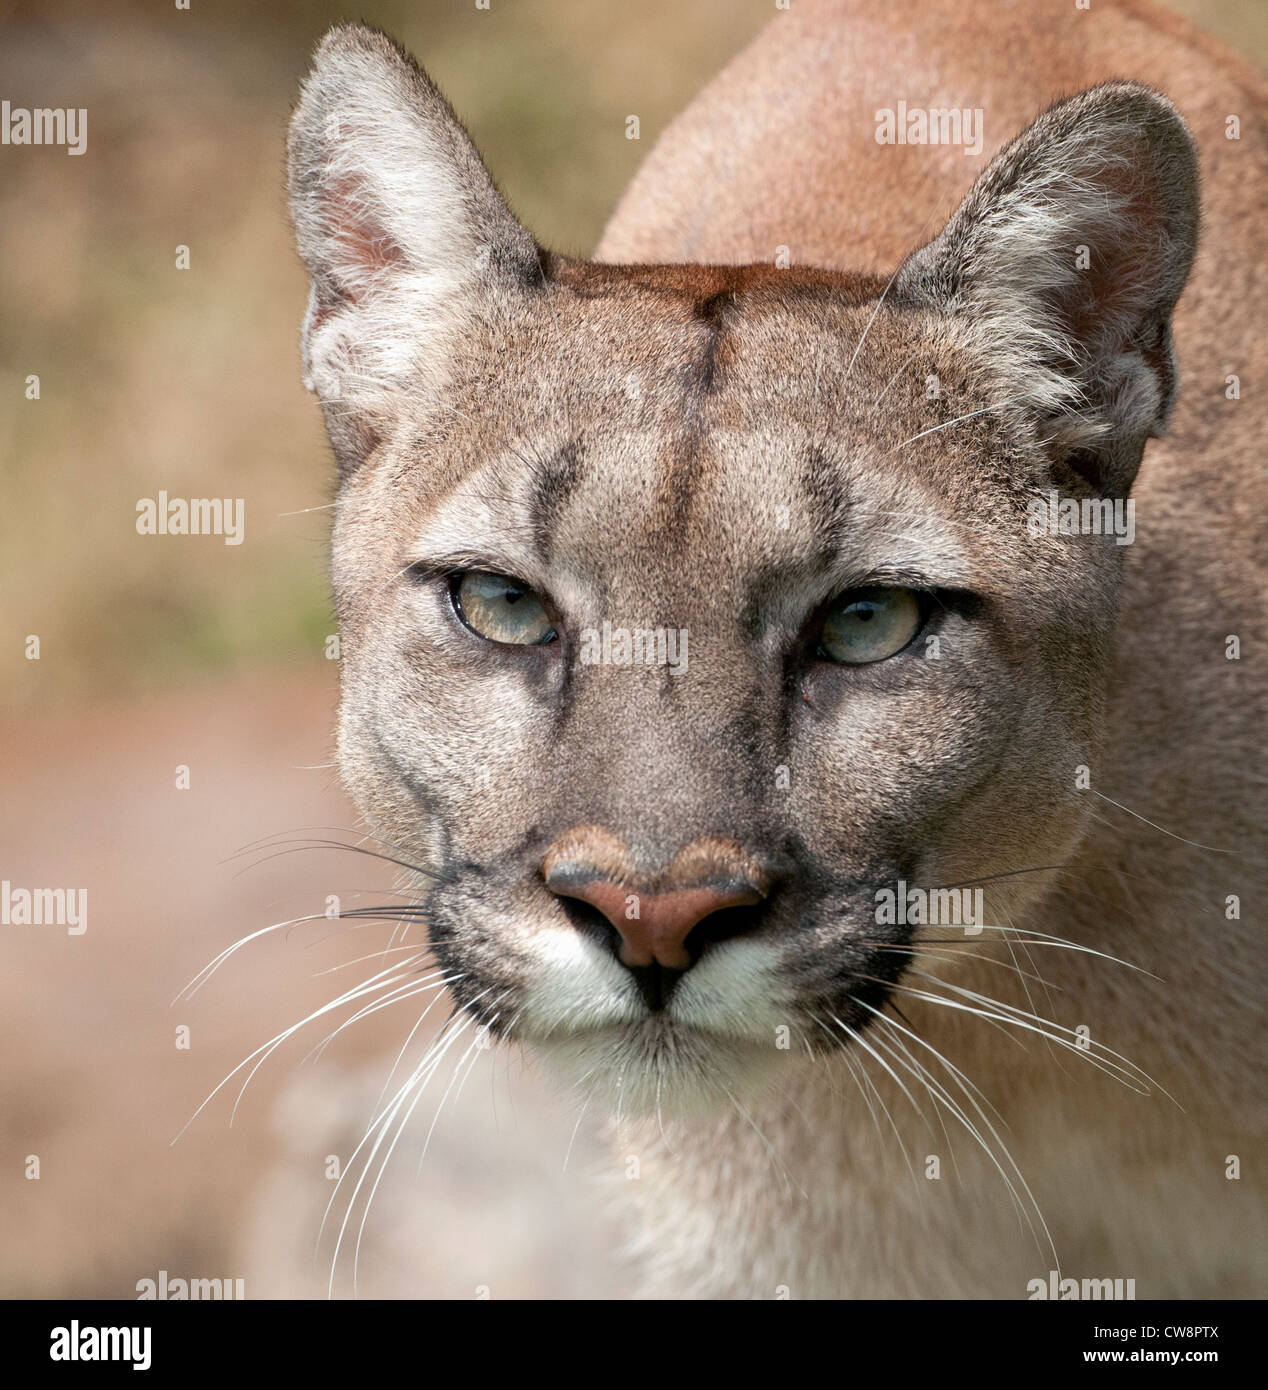 Puma (cerrar Fotografía de Alamy